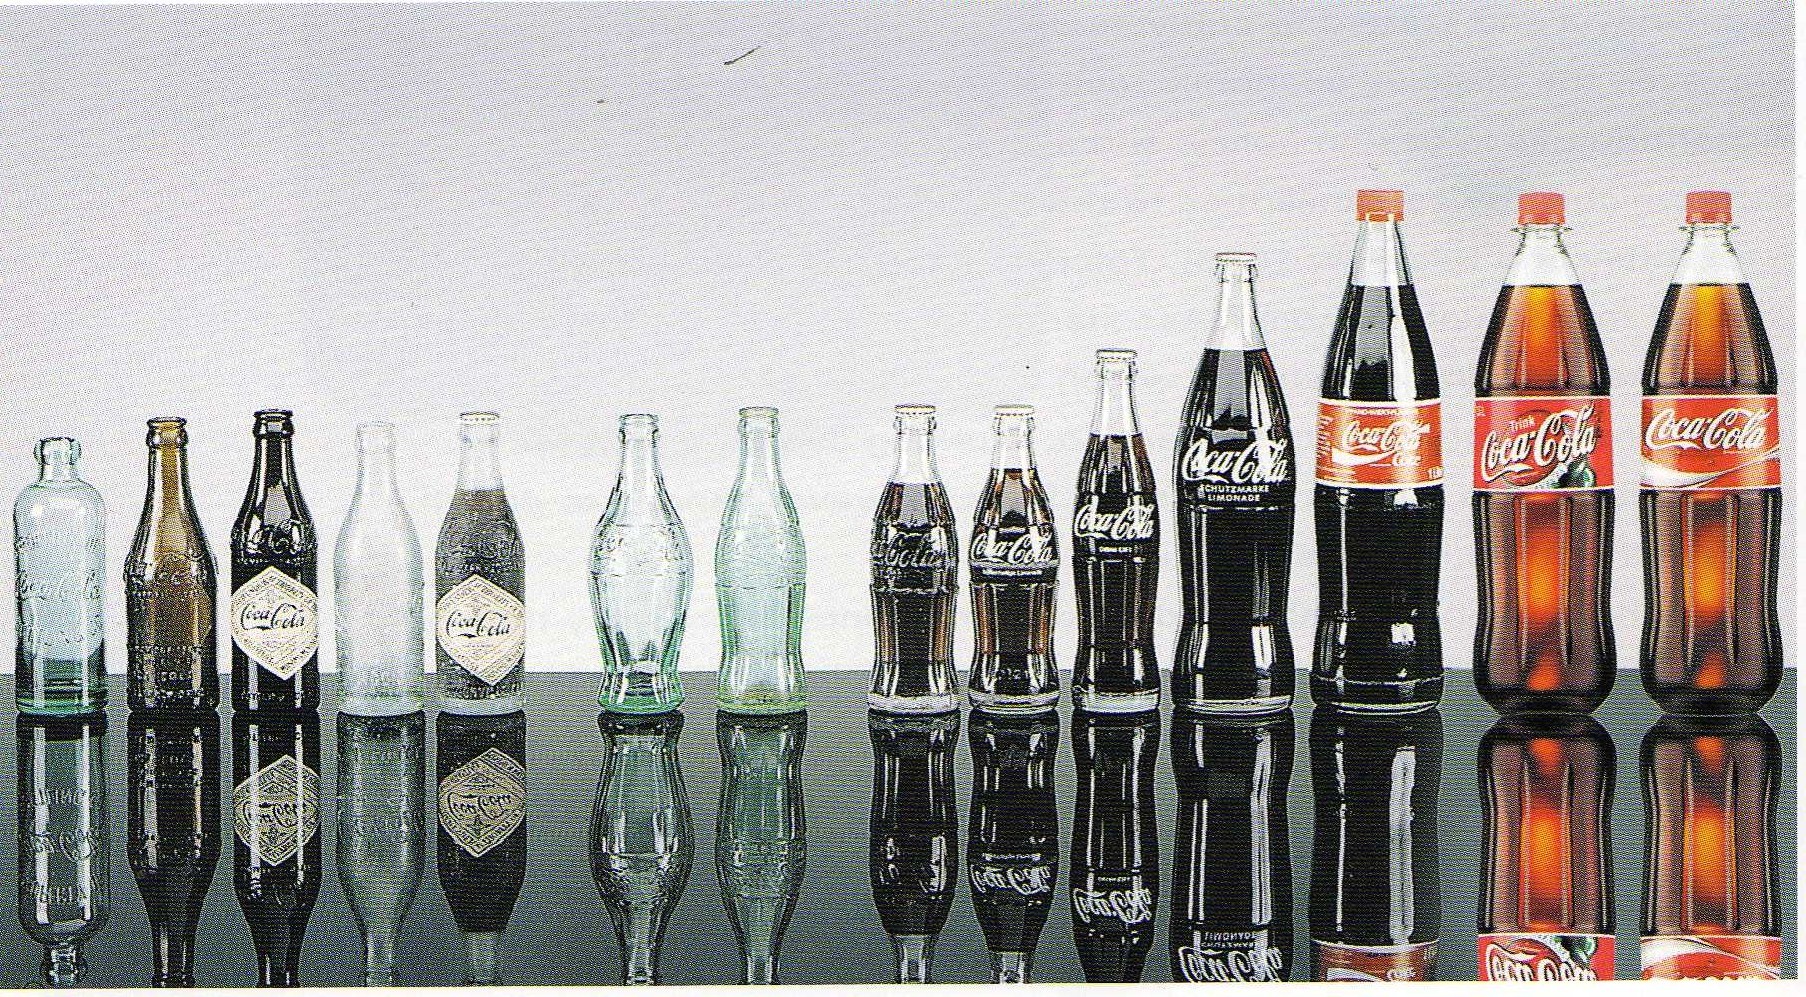 Coca-Cola - nineteenth hundred historical origin